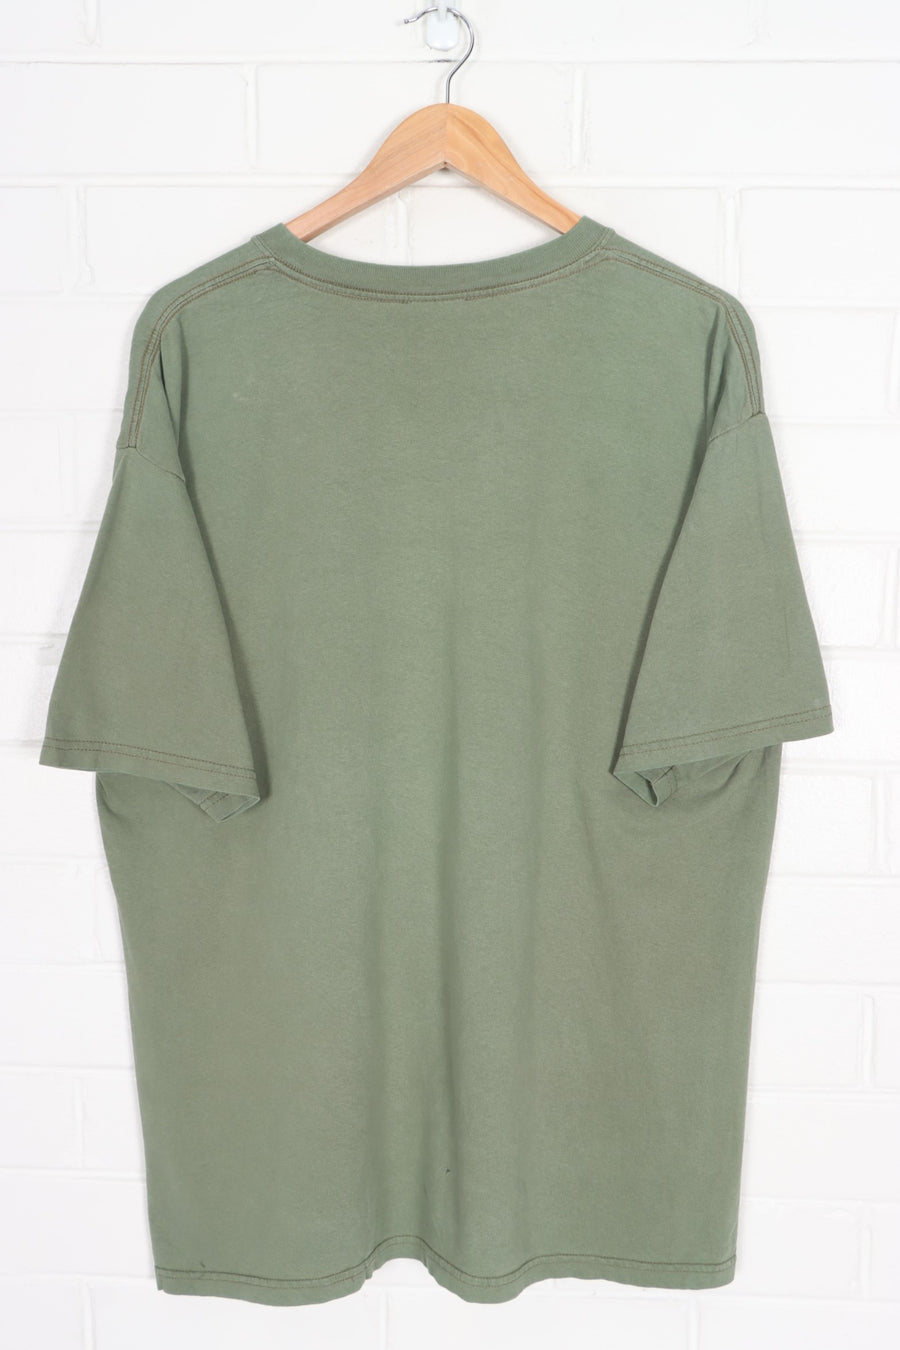 DICKIES Army Green Camo Logo Y2K T-Shirt (XL)